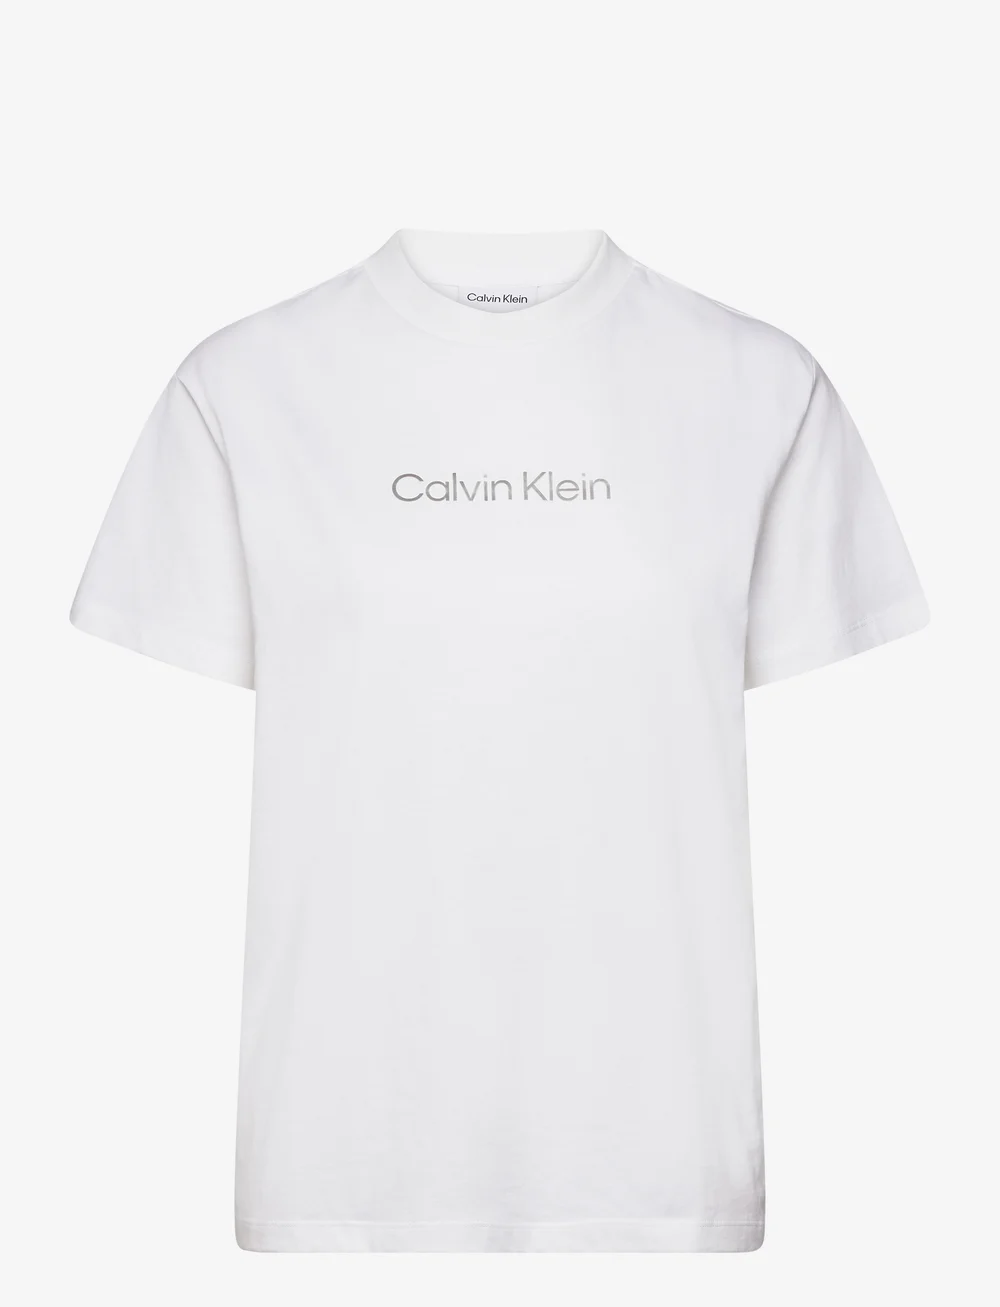 shop & T-shirt – at tops Hero t-shirts – Klein Logo Booztlet Metallic Calvin